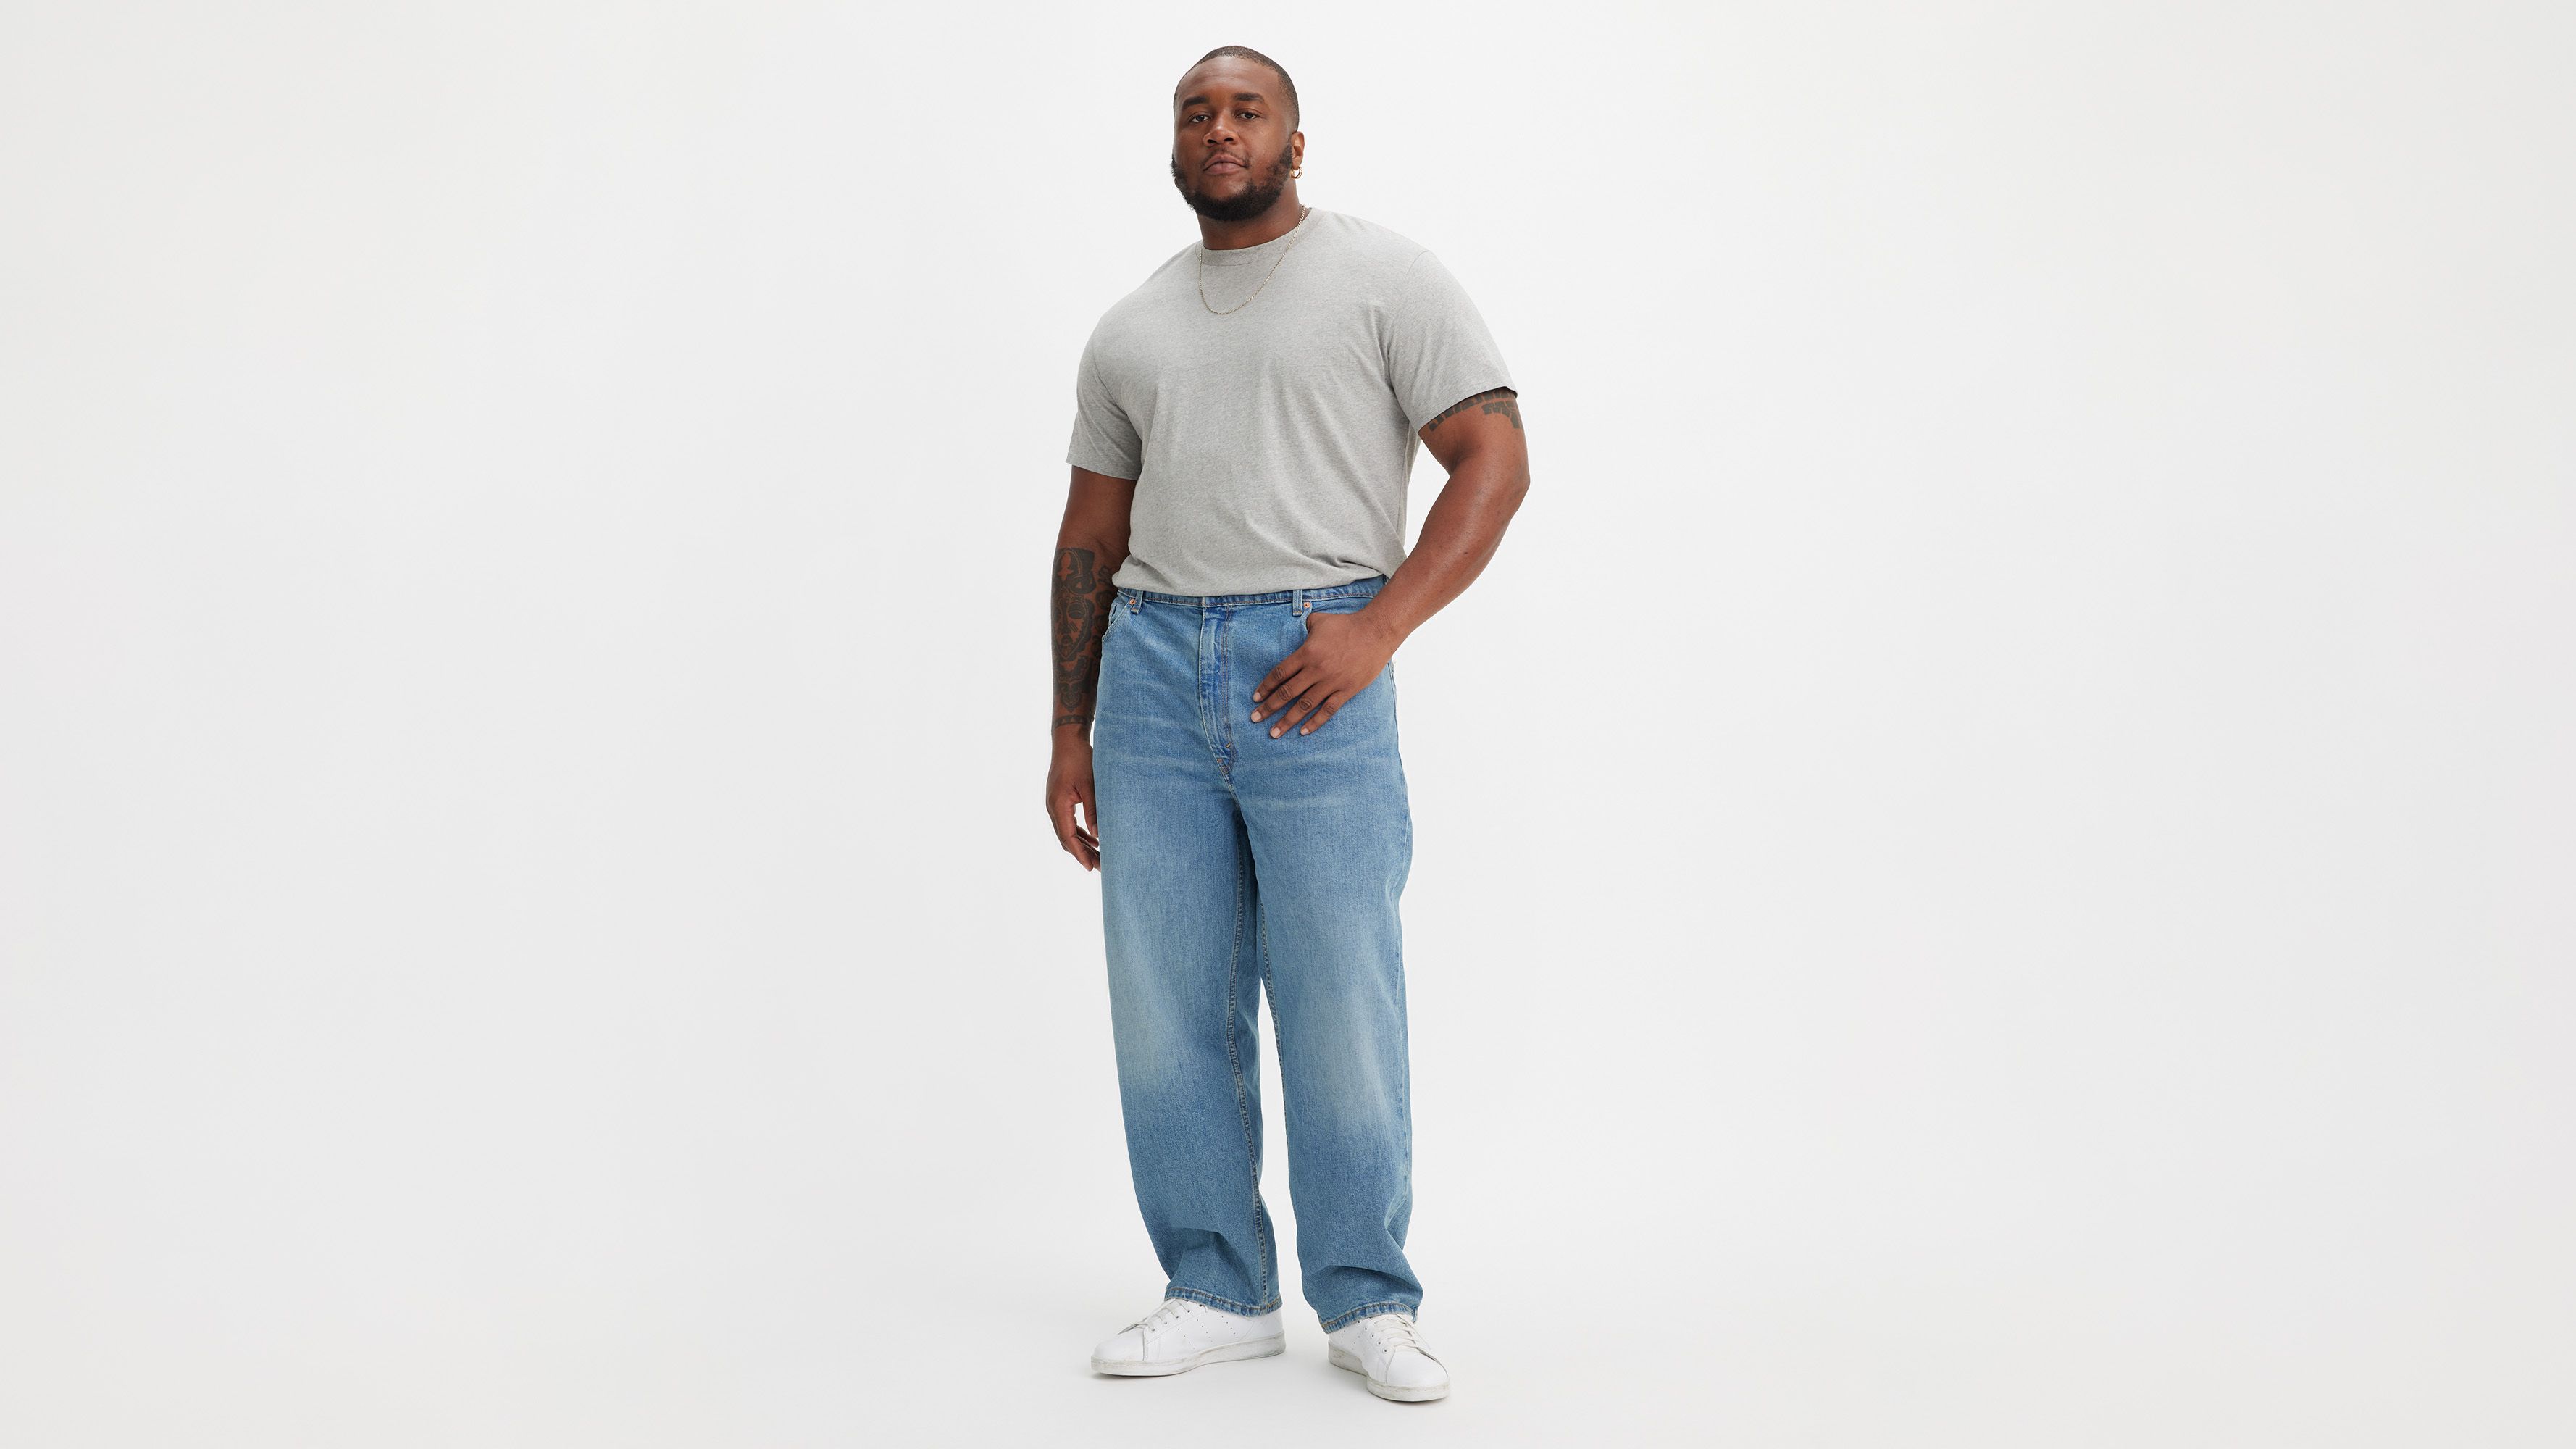 mens levis 550 stretch jeans